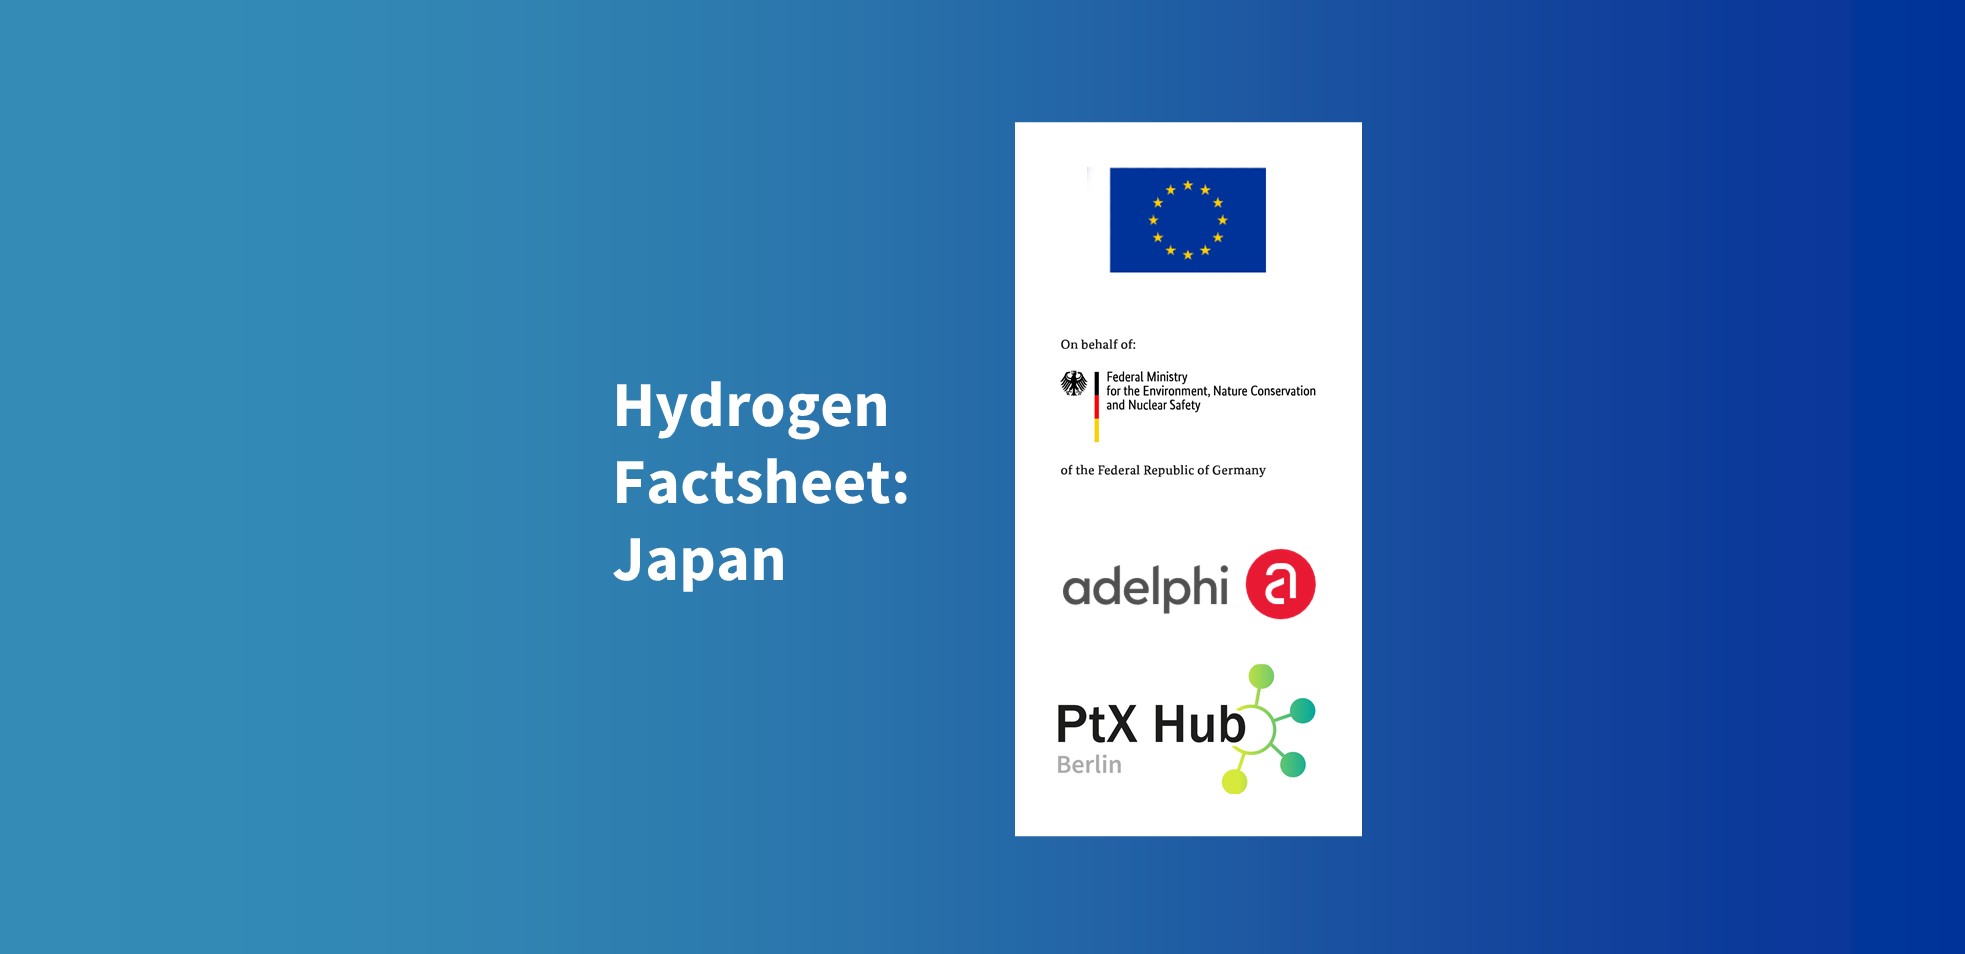 Preview Header for Hydrogen Factsheet on Japan